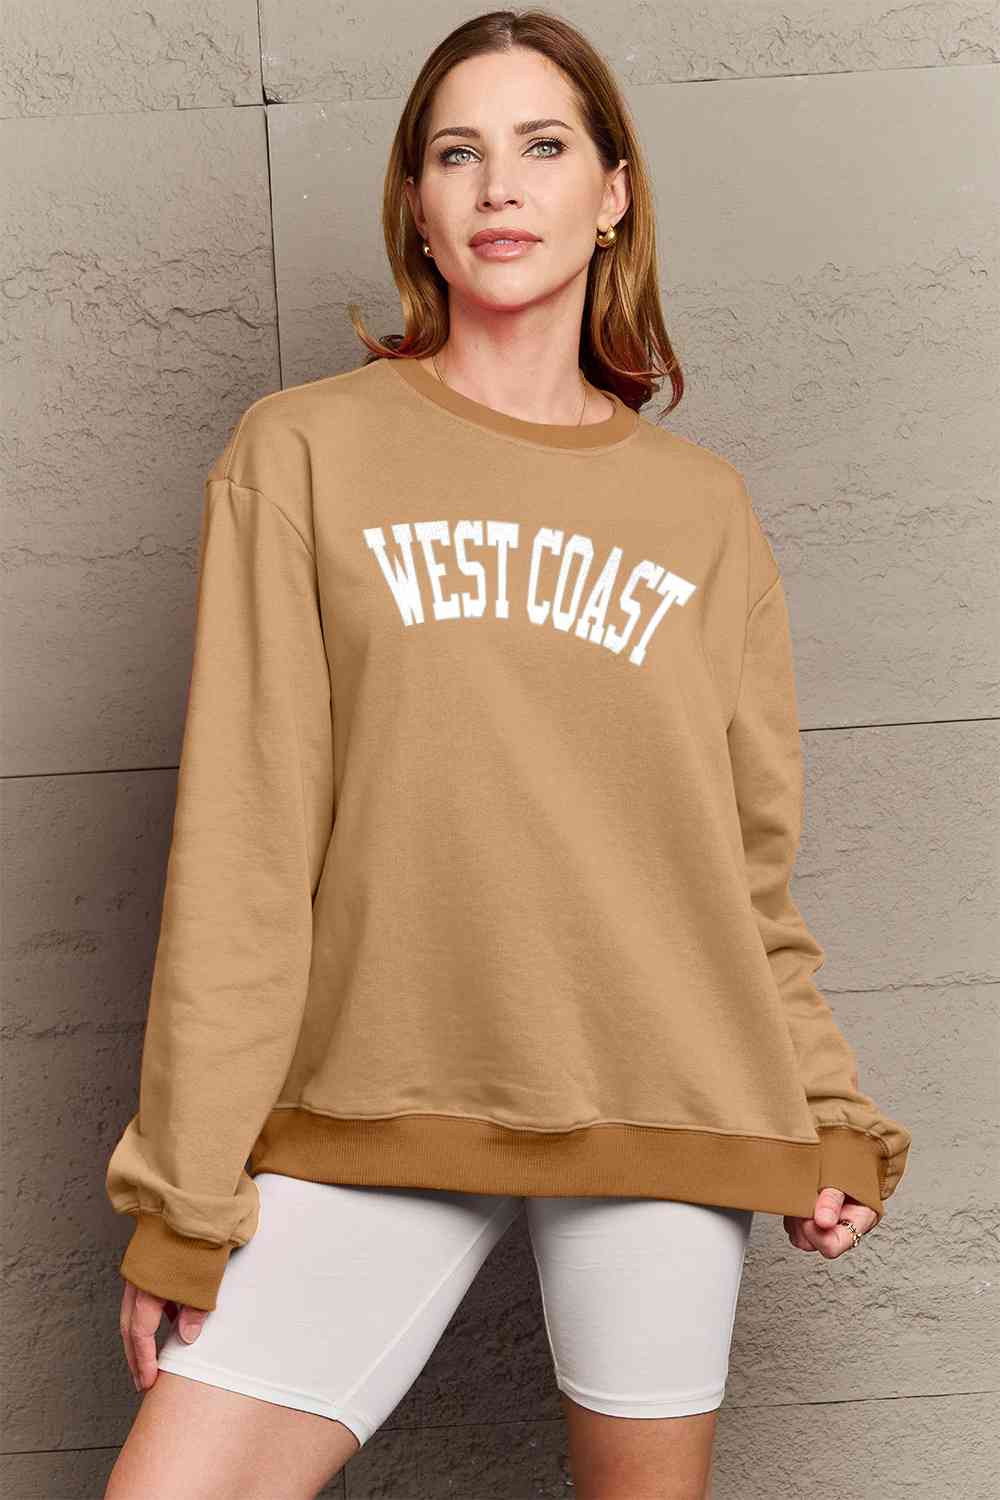 Simply Love Full Size WEST COAST Graphic Long Sleeve Sweatshirt